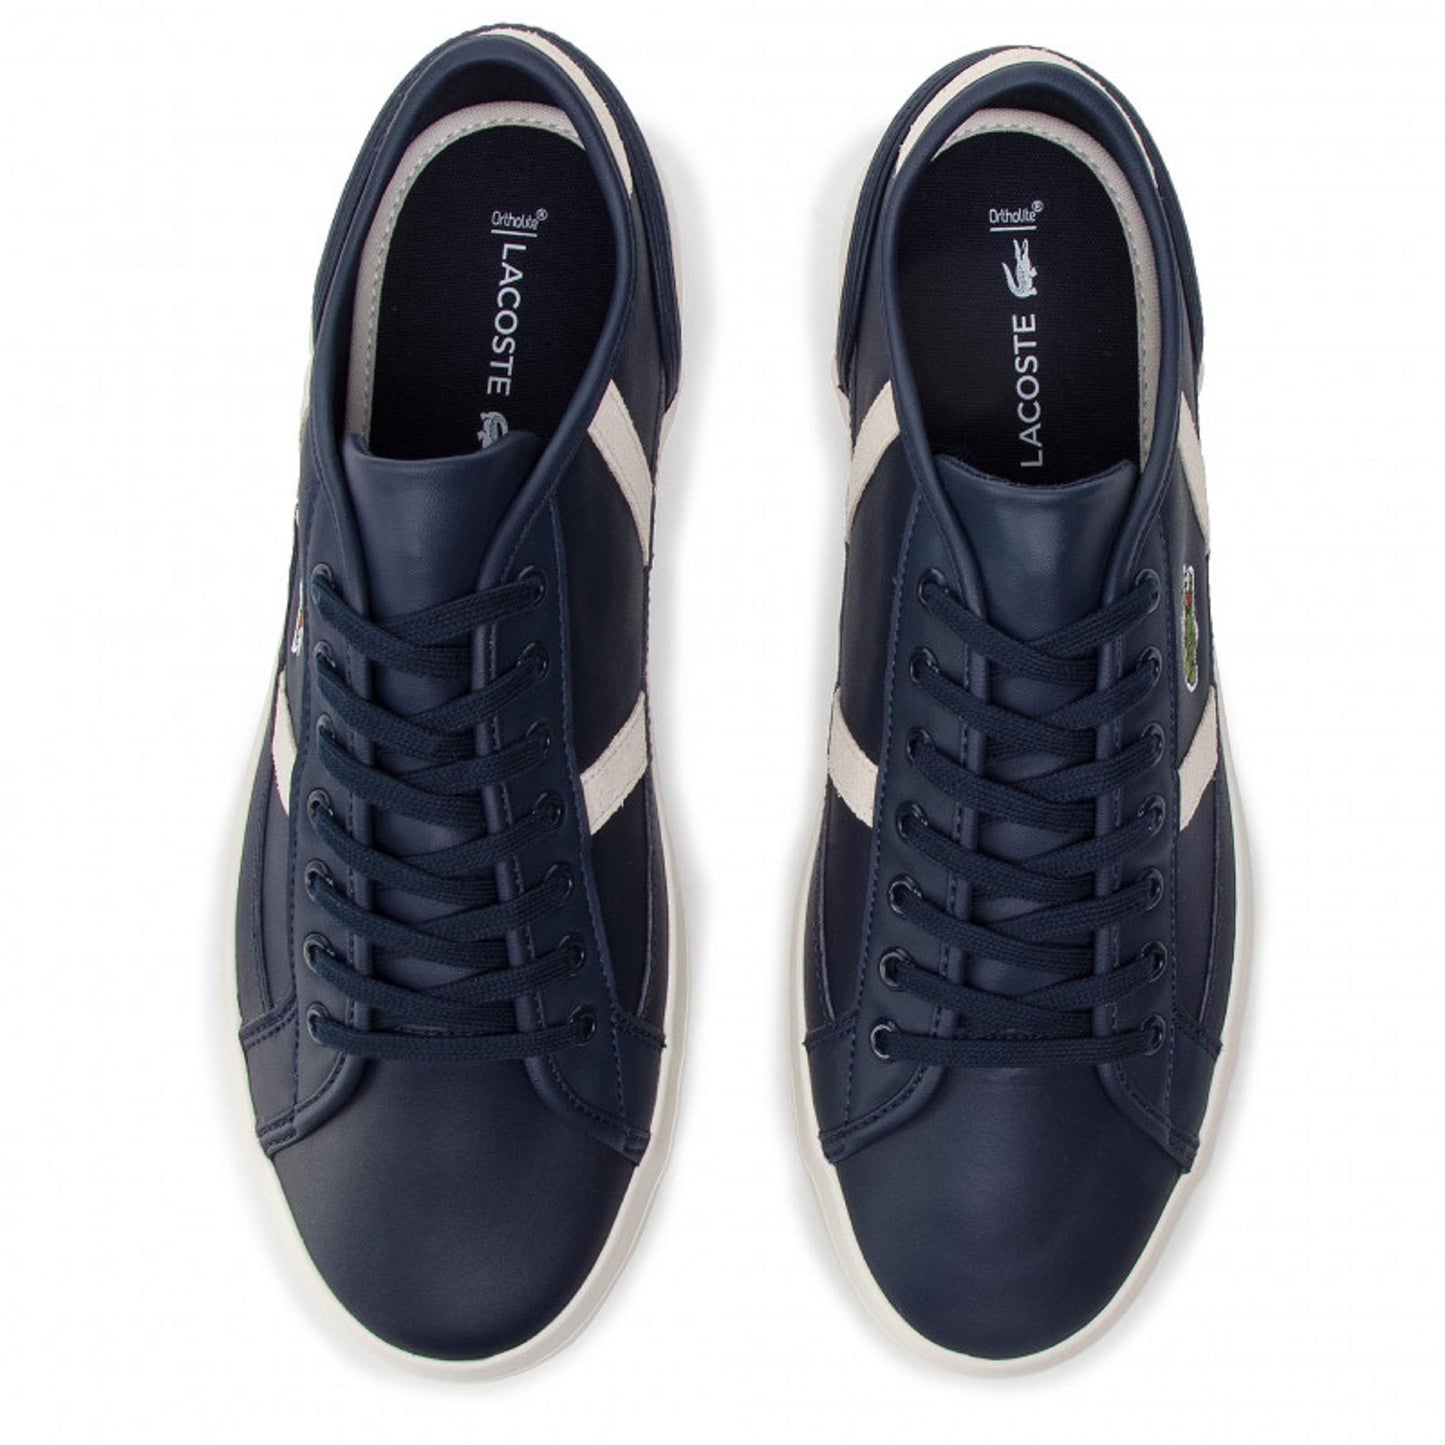 Lacoste Men Sideline Sneaker 119 3 CMA Leather Navy / Off White 7-37CMA0068J18